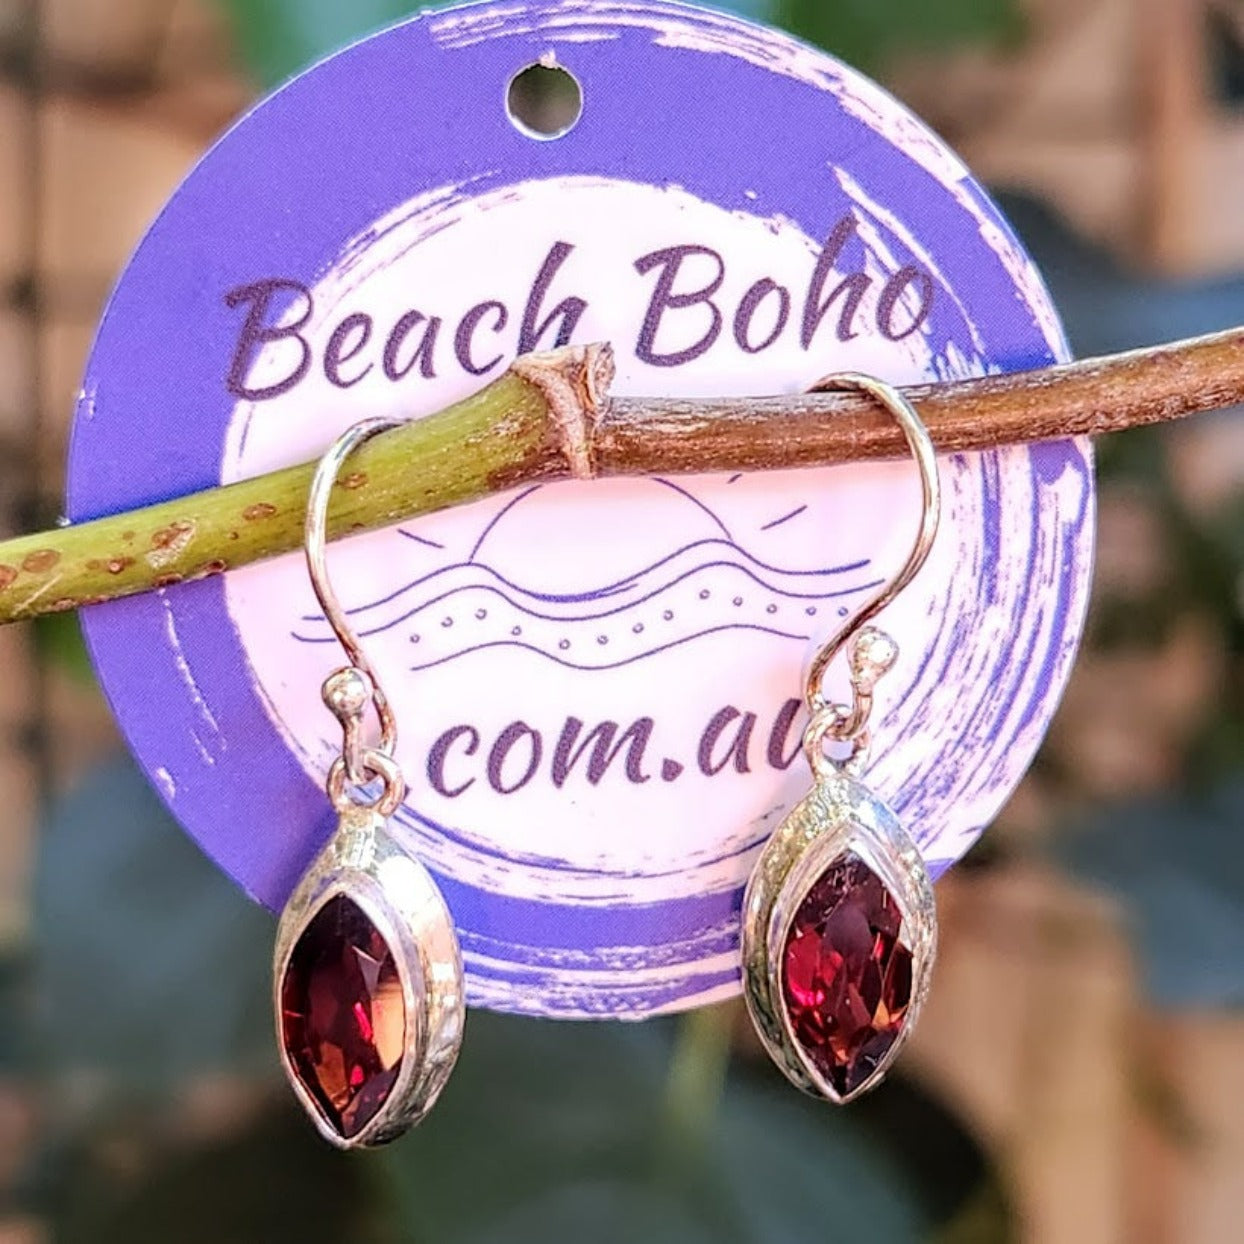 EYE OF LOVE - GARNET 925 DROP HOOK EARRINGS - Premium earrings from www.beachboho.com.au - Just $50! Shop now at www.beachboho.com.au